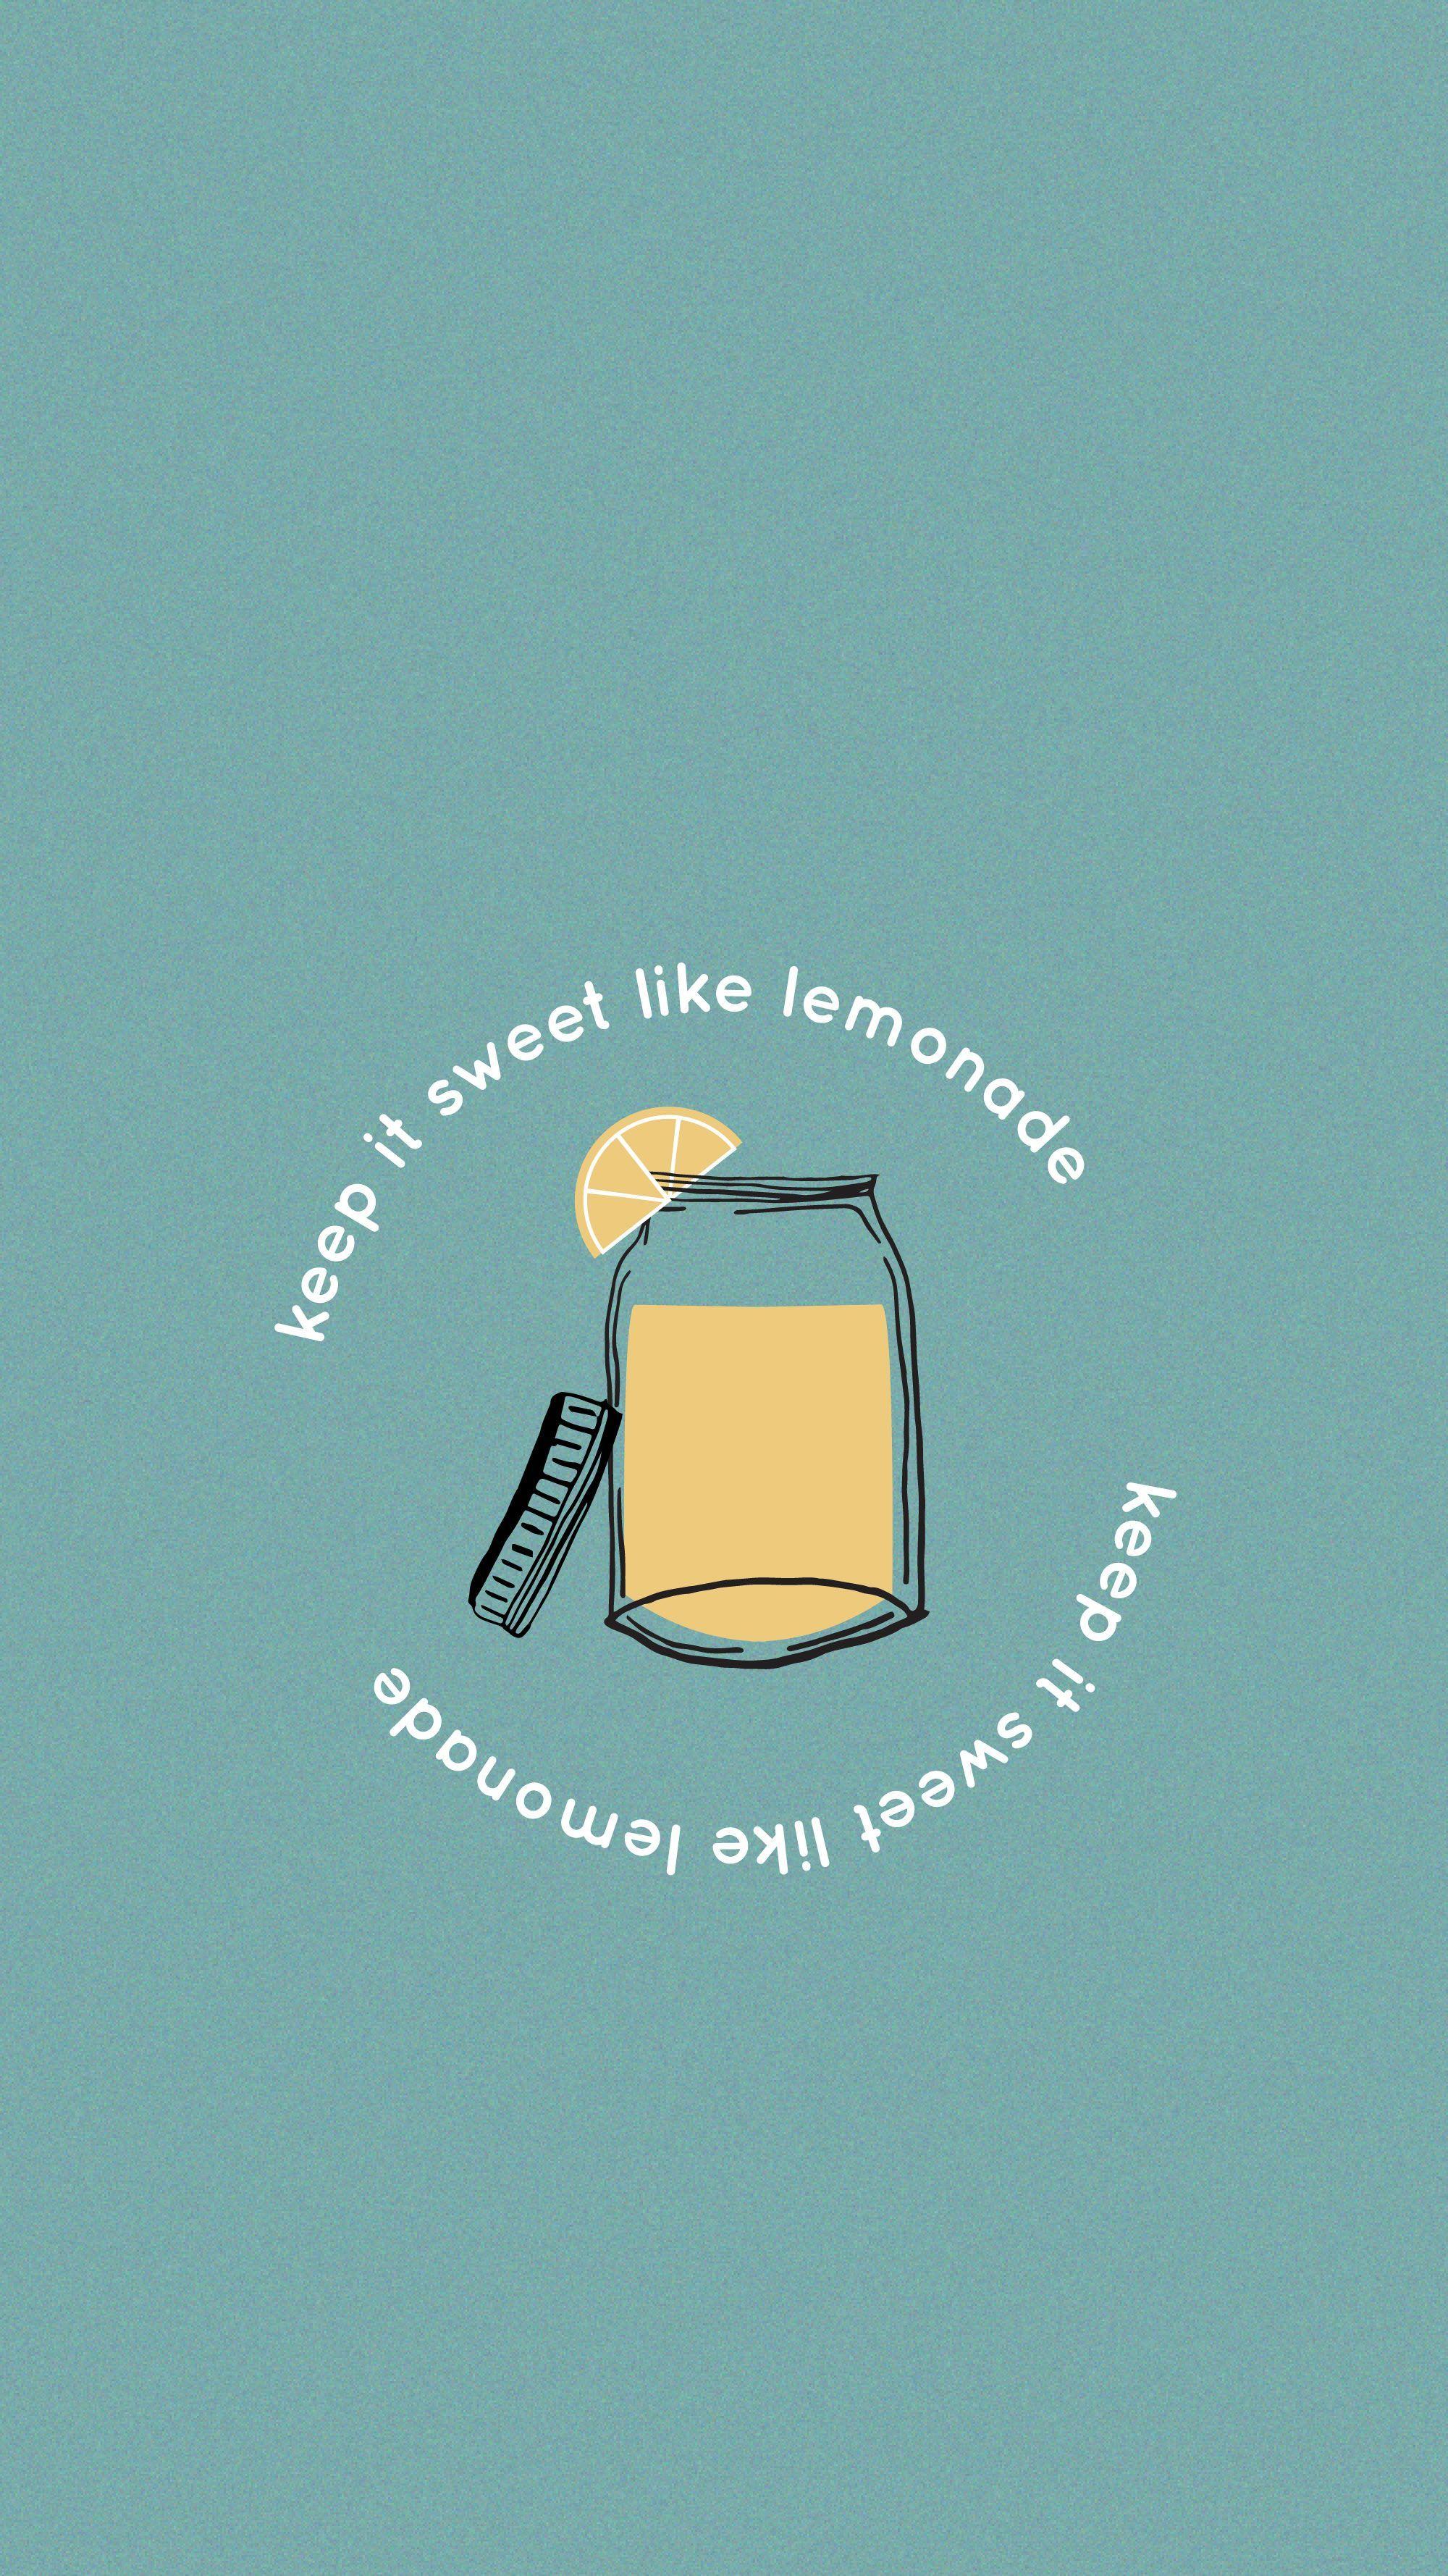 Wallpaper glass lemon mint lemonade images for desktop section еда   download